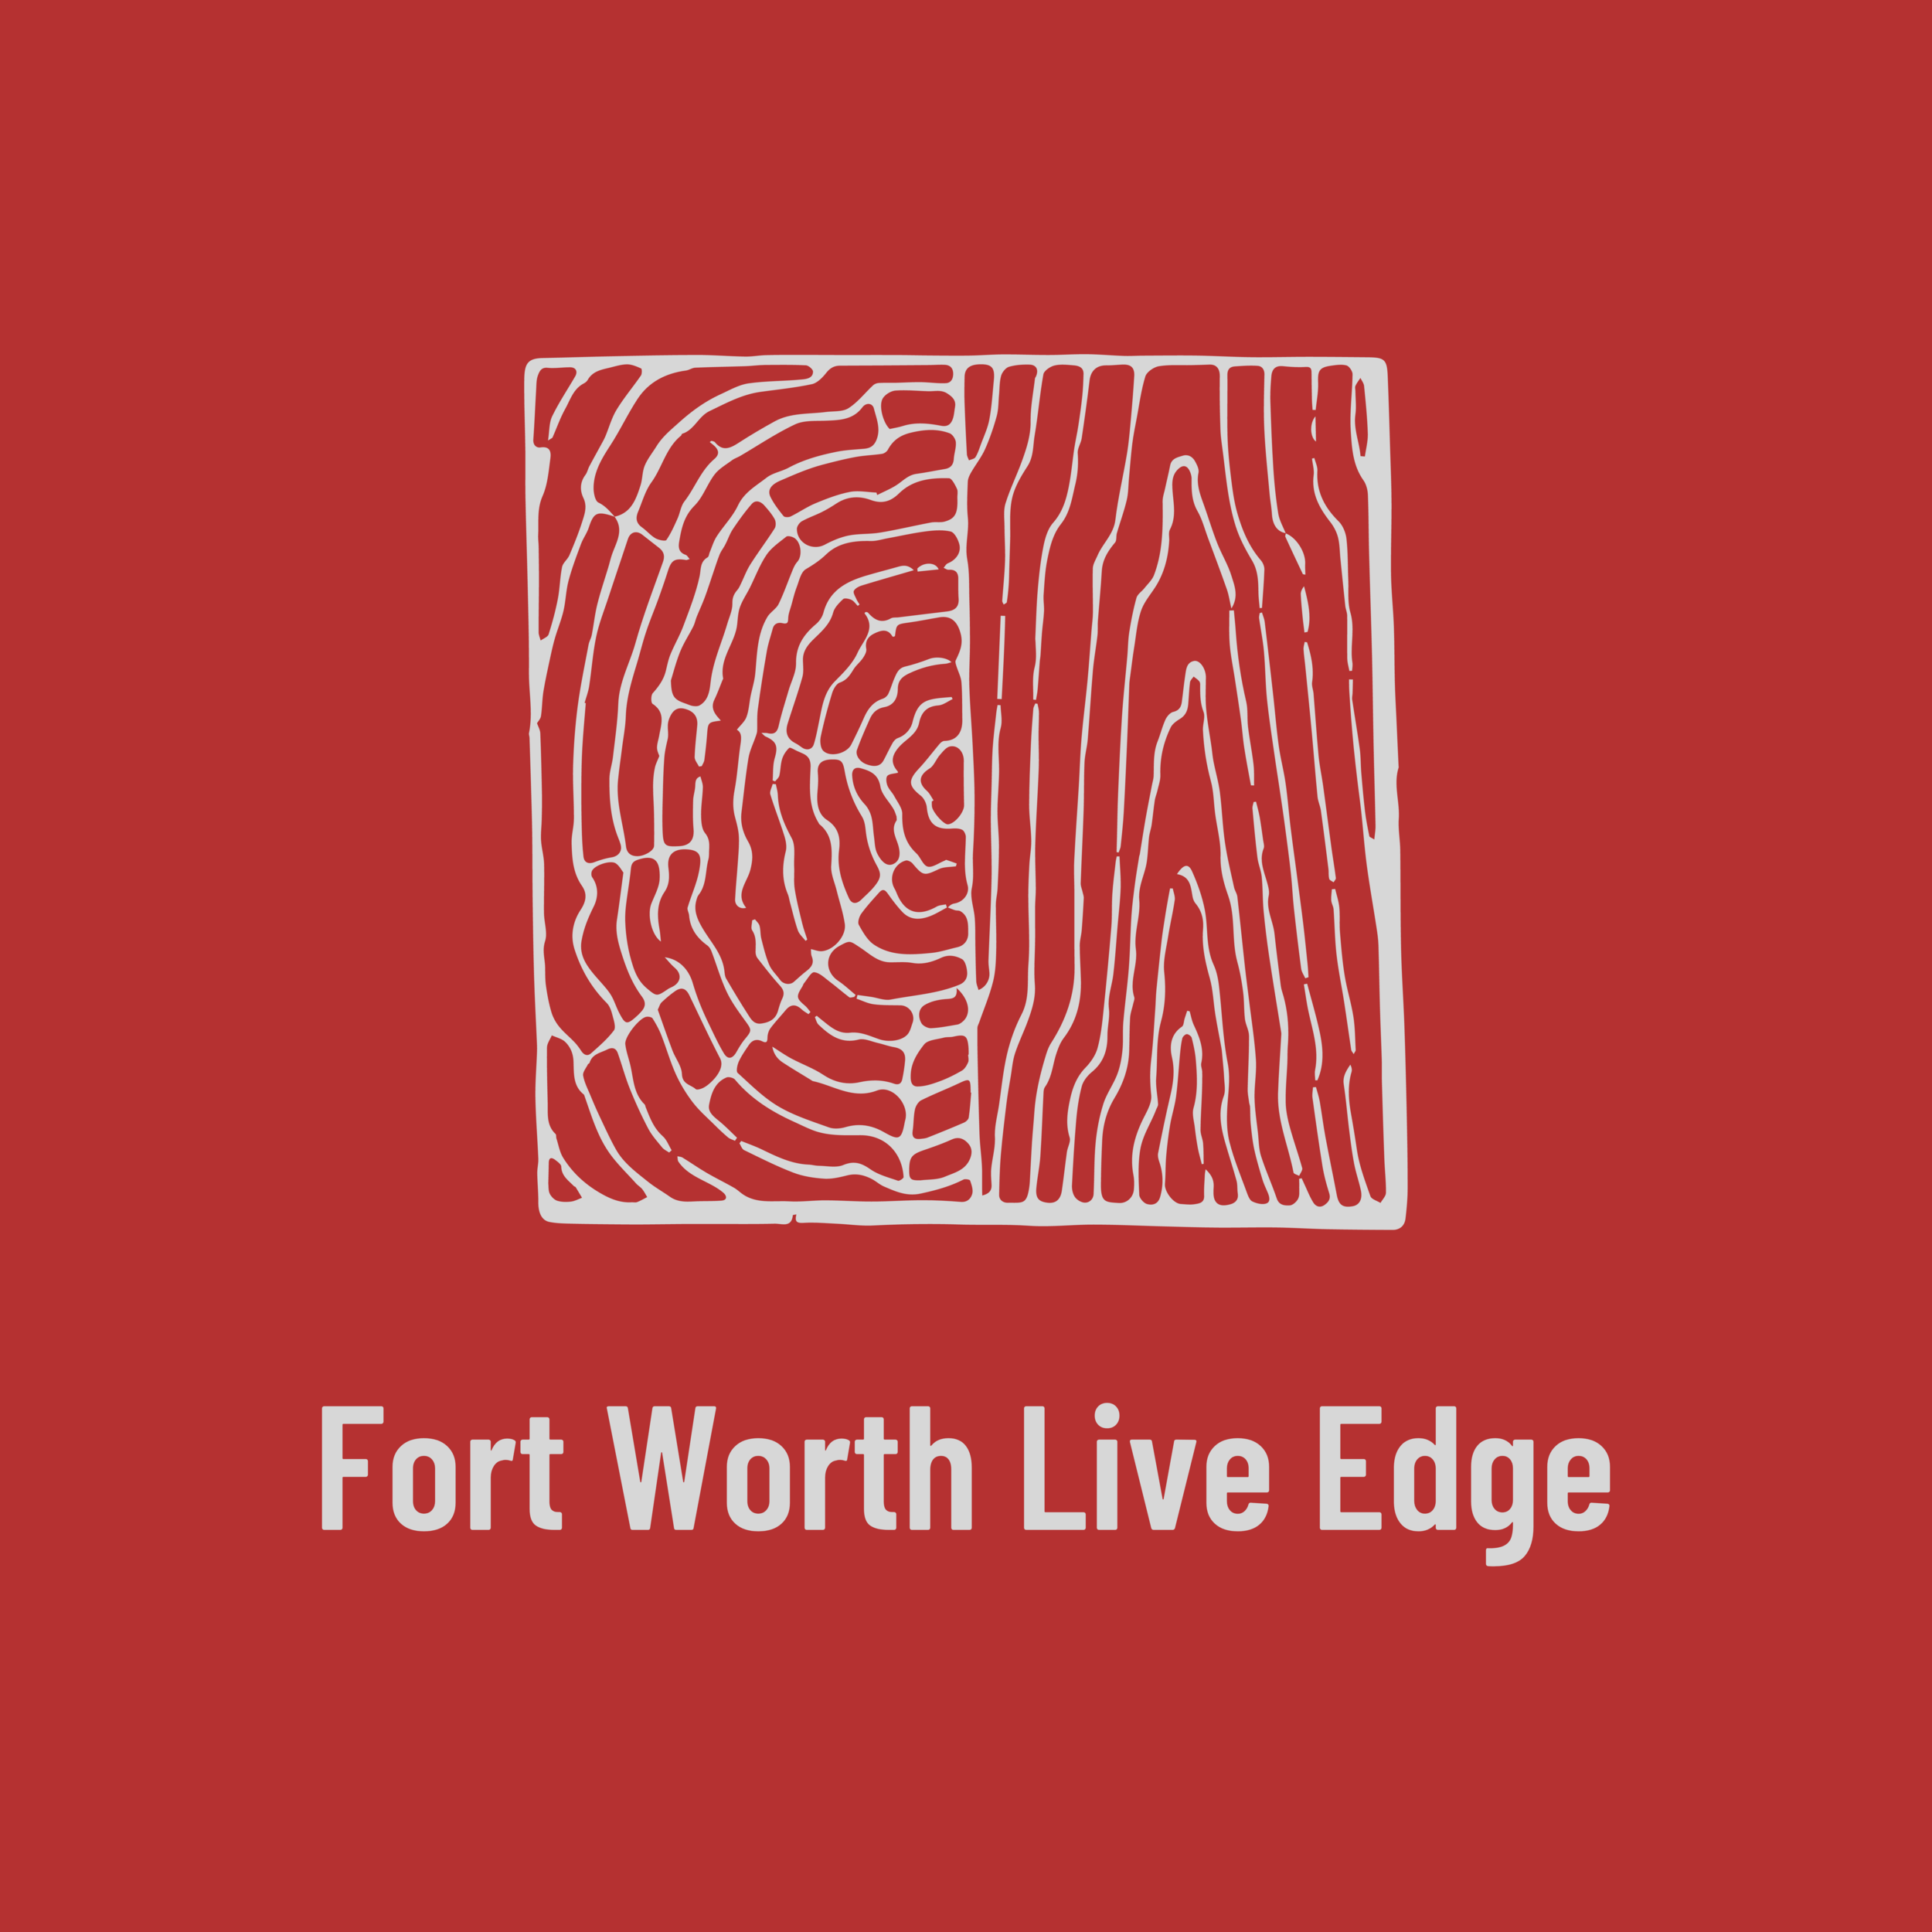 Fort Worth Live Edge